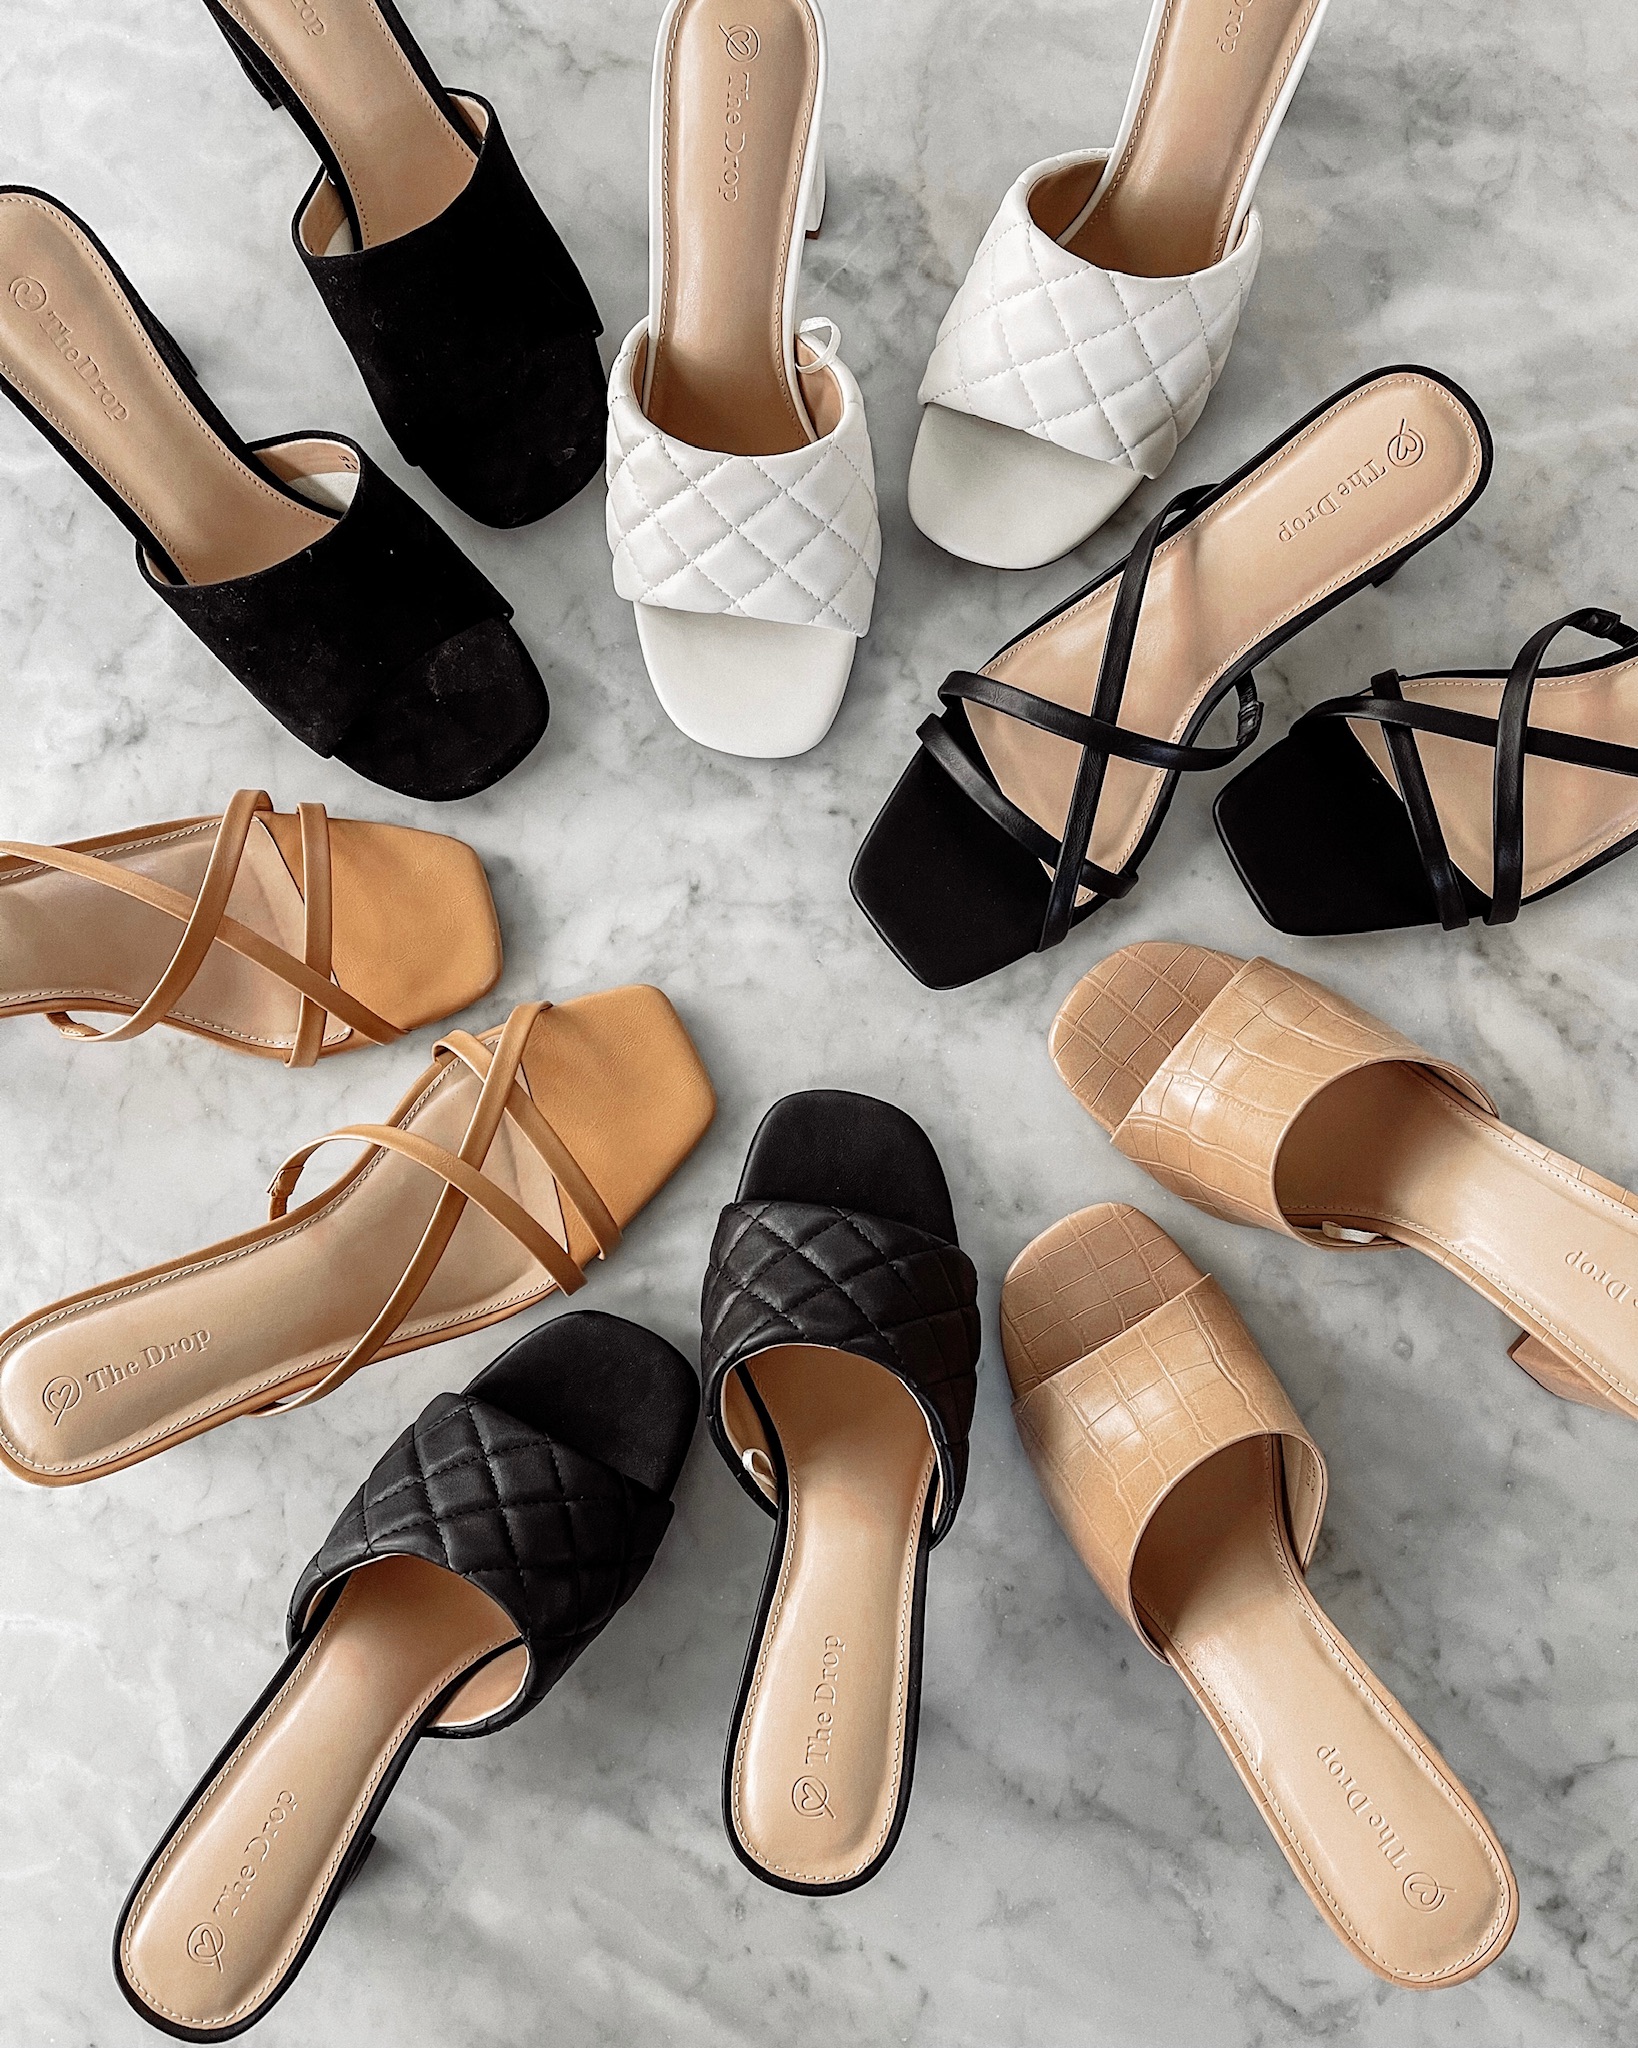 Fashion Jackson Amazon Fashion Drop Sandals